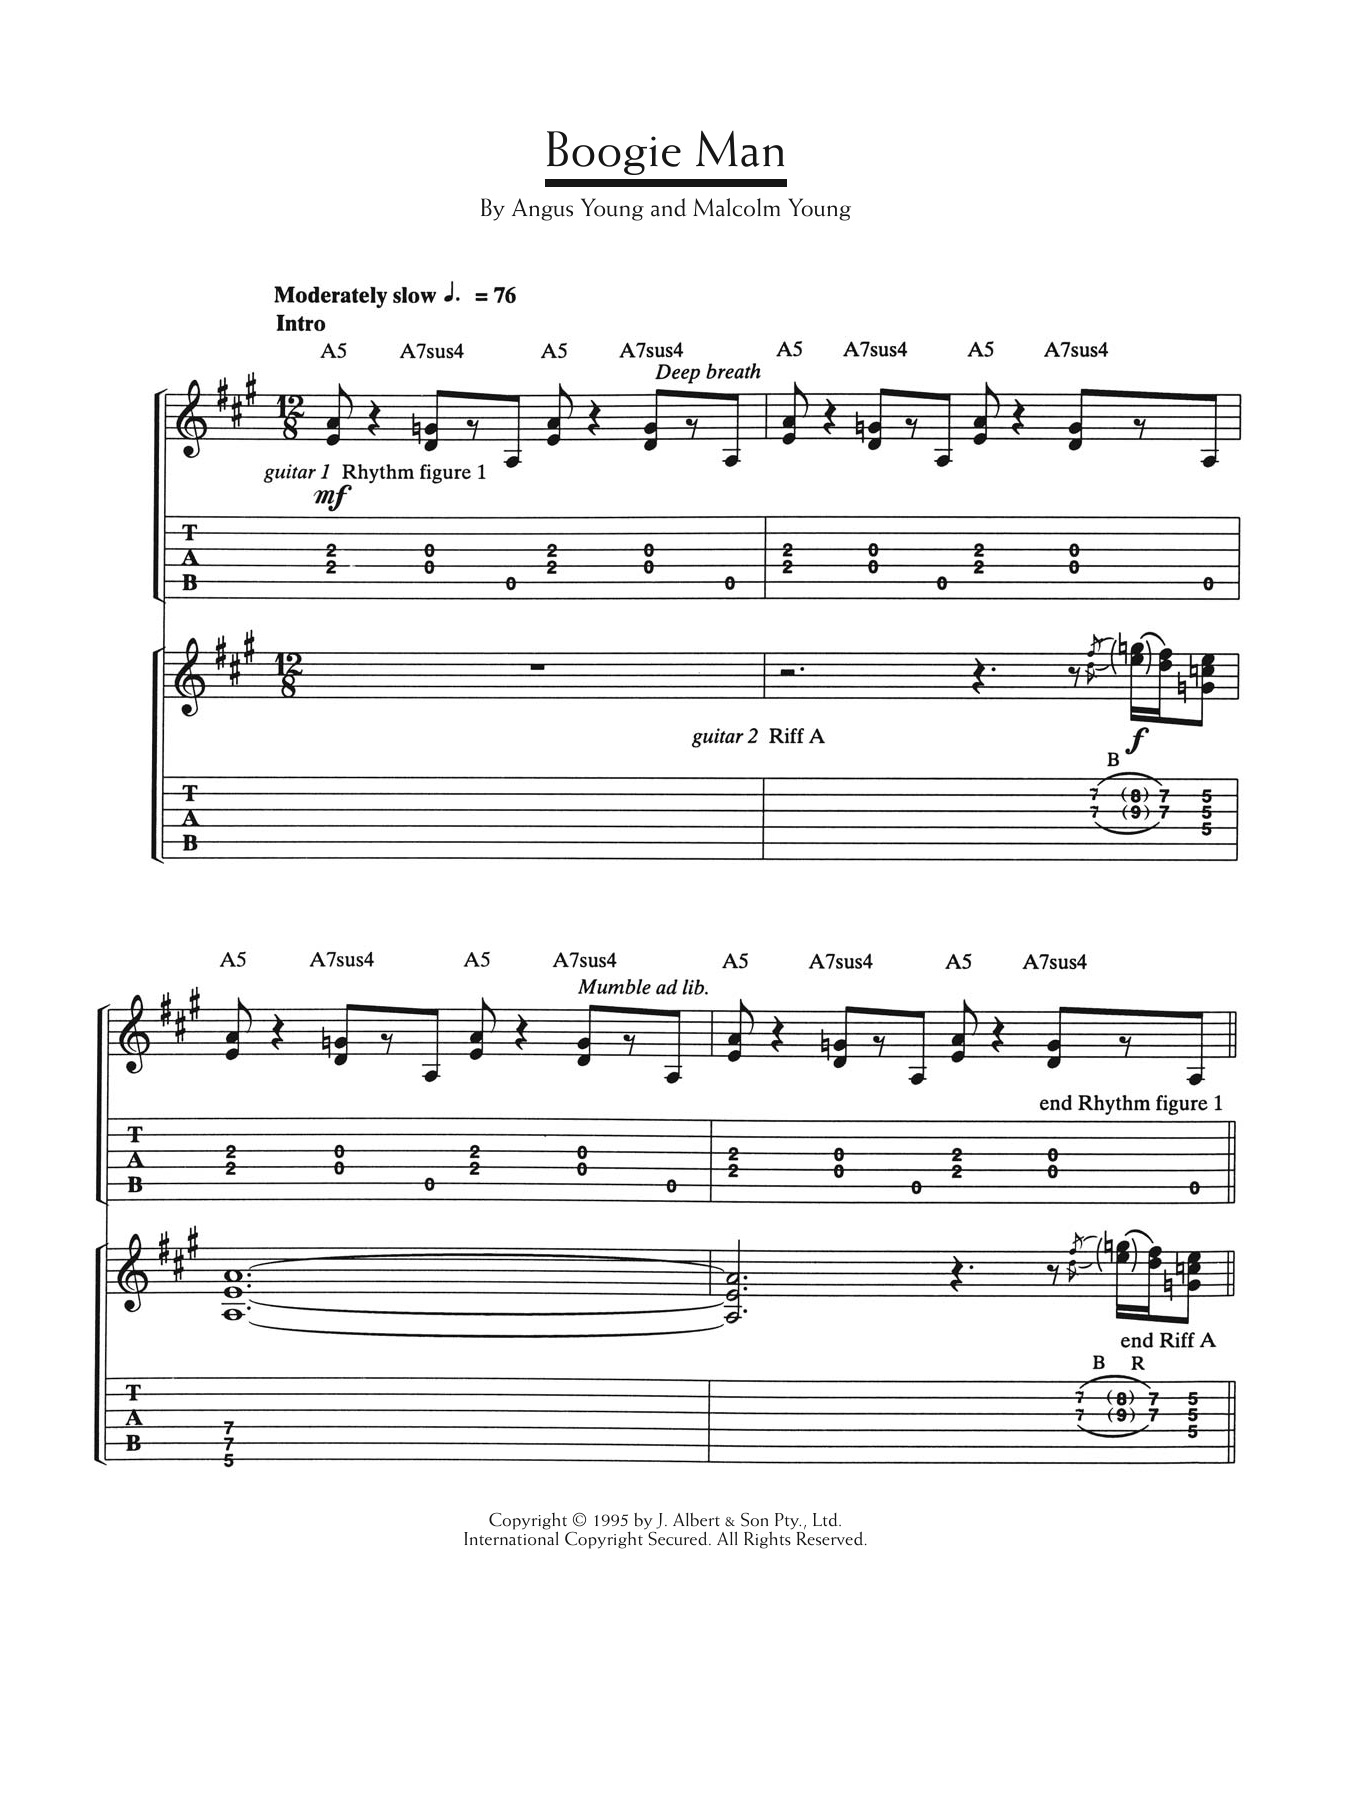 AC/DC Boogie Man Sheet Music Notes & Chords for Guitar Tab - Download or Print PDF